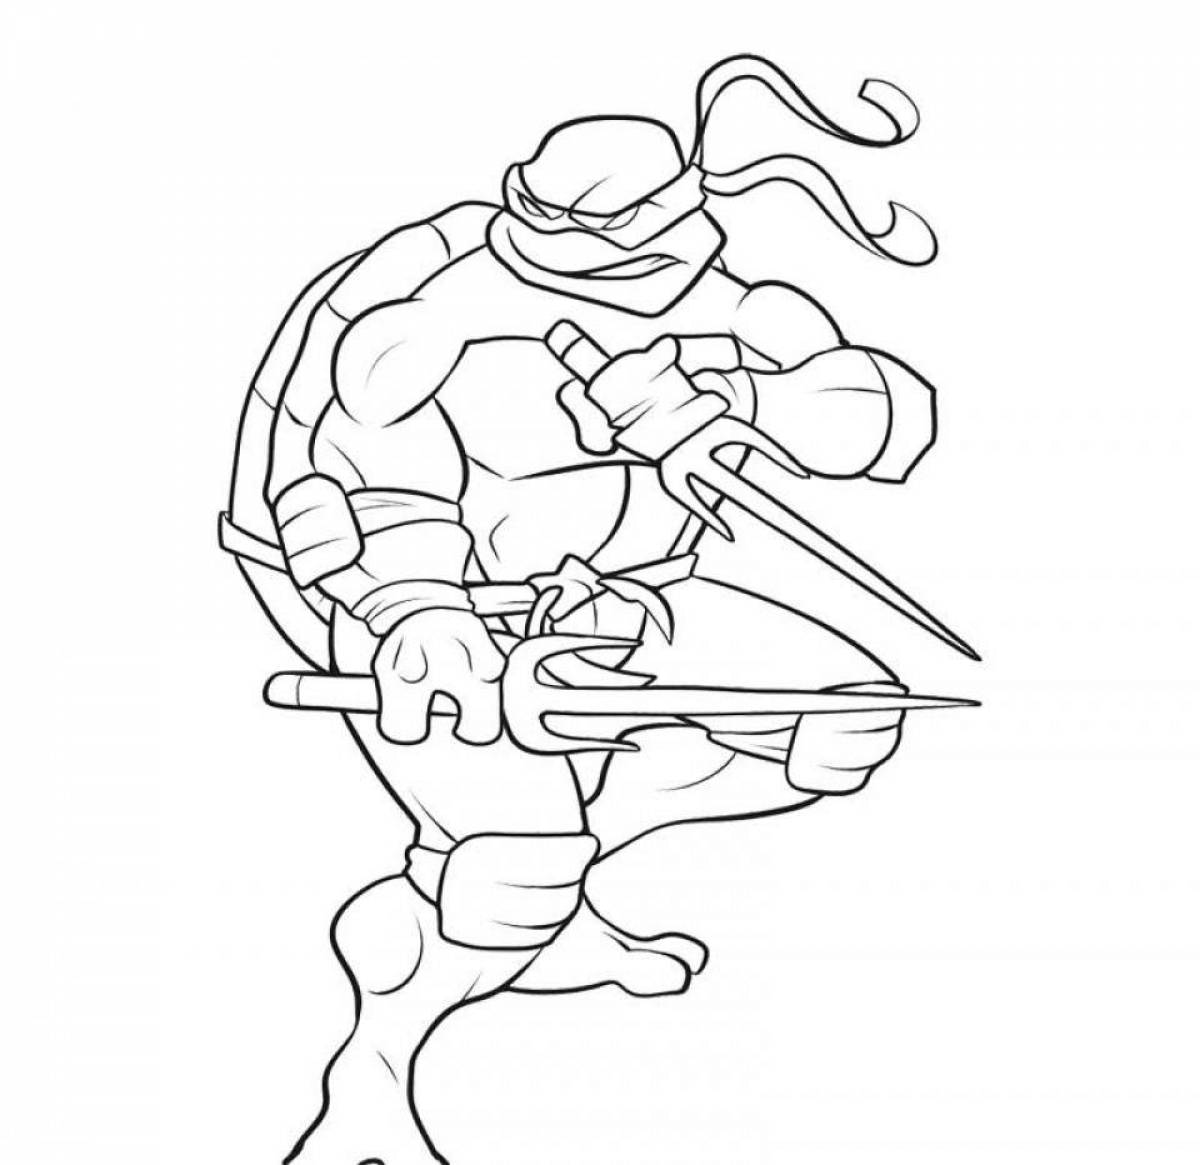 Raphael's exquisite Teenage Mutant Ninja Turtles coloring page